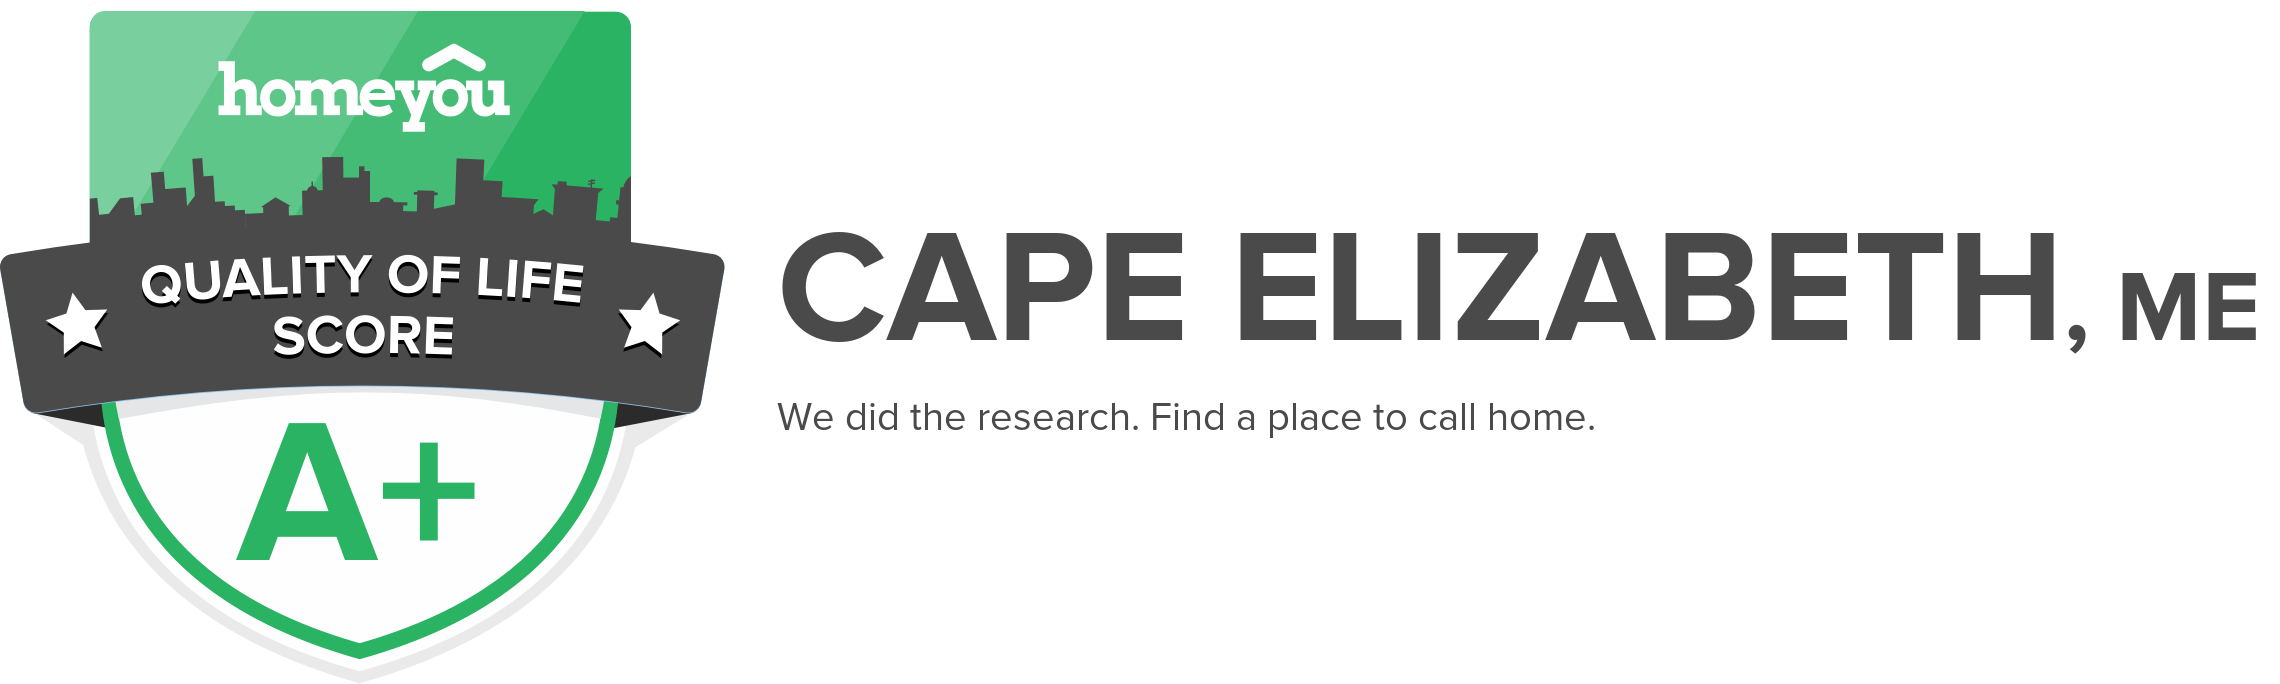 Cape Elizabeth, ME